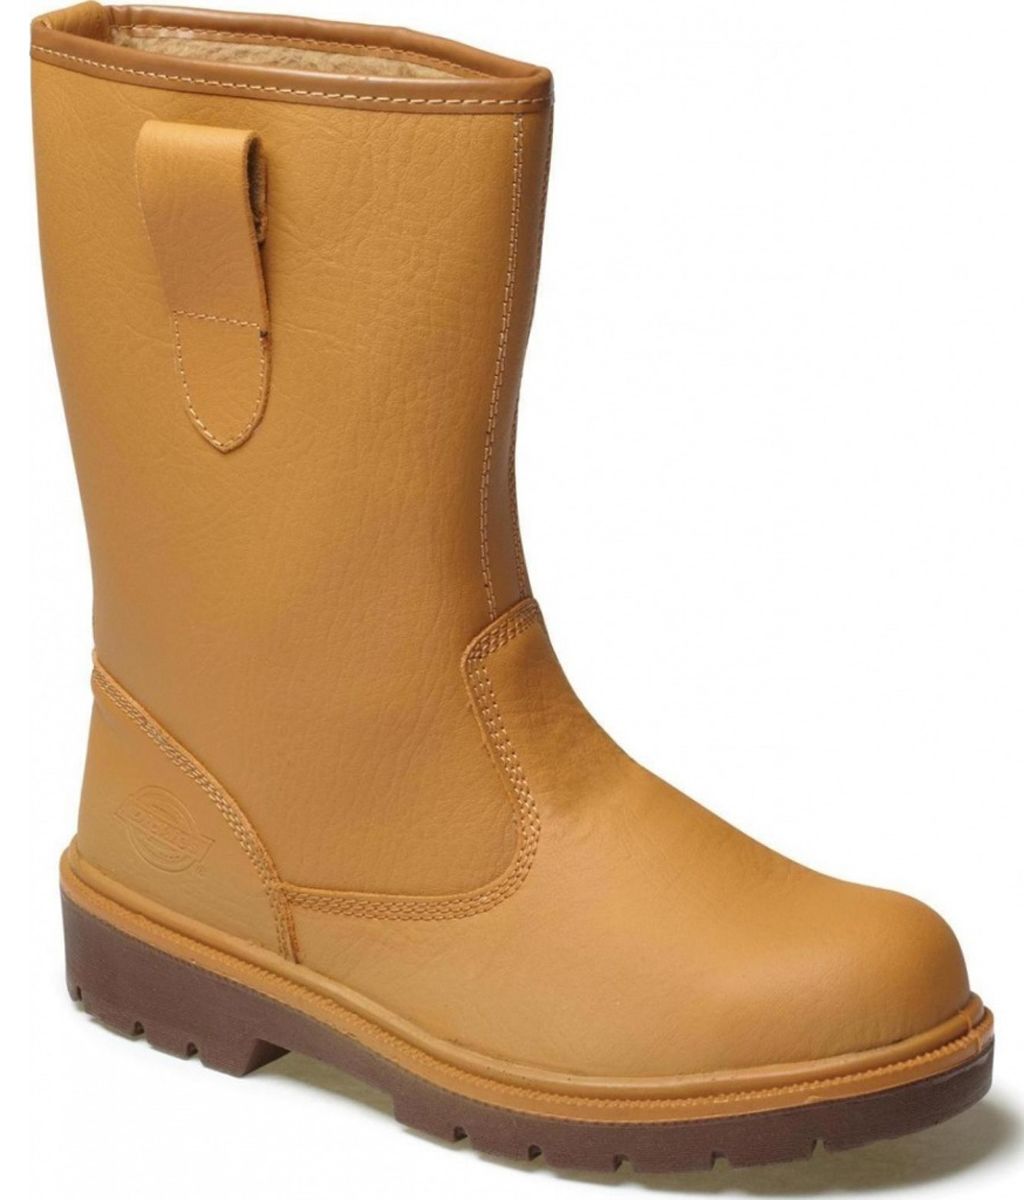 Dickies Dixon Beige Steel Toe Capped Safety Boots, UK 8, EU 42